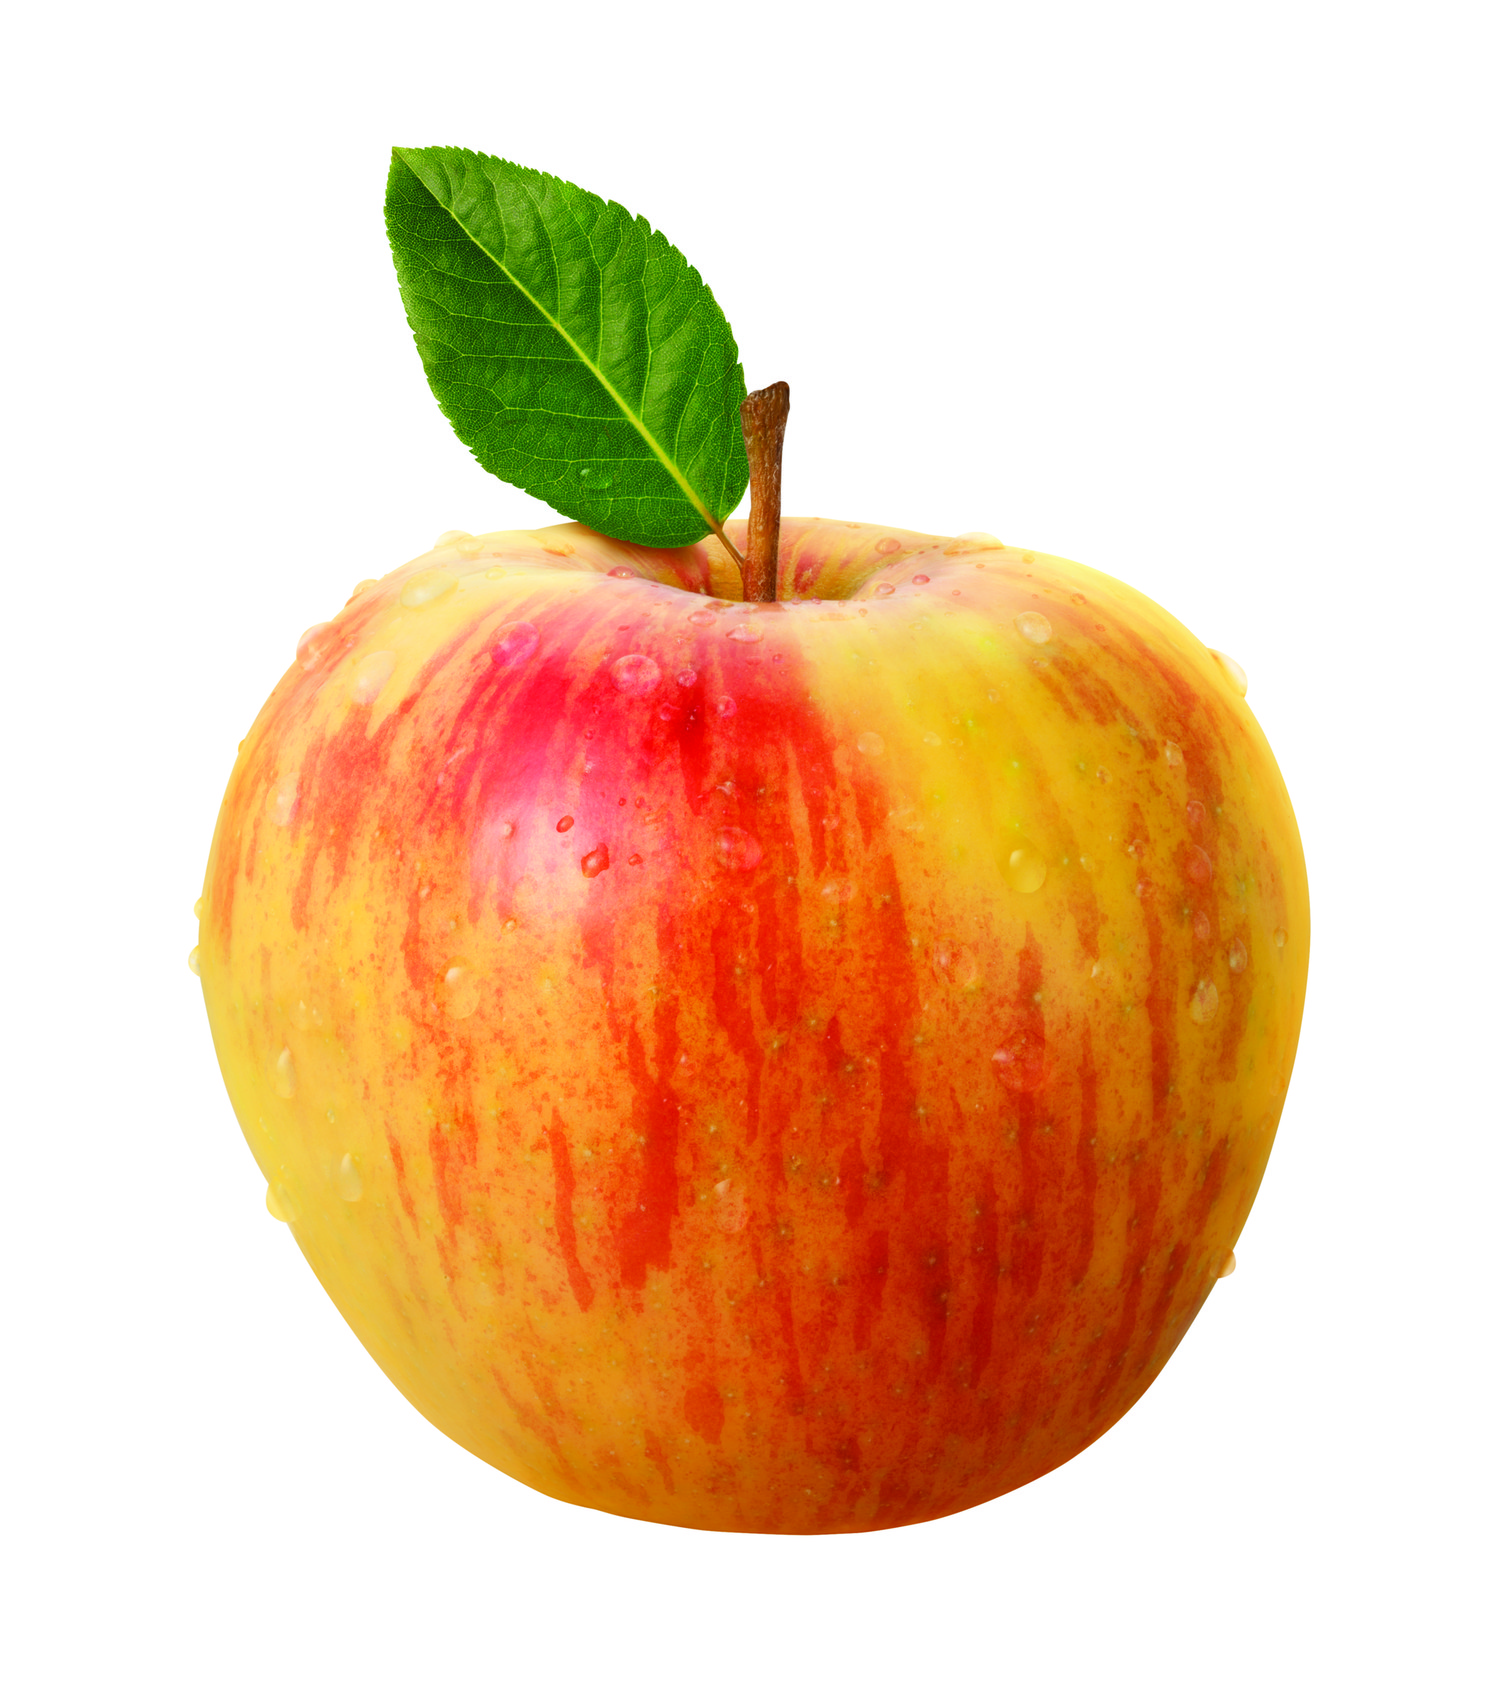 Image of a Honeycrisp apple